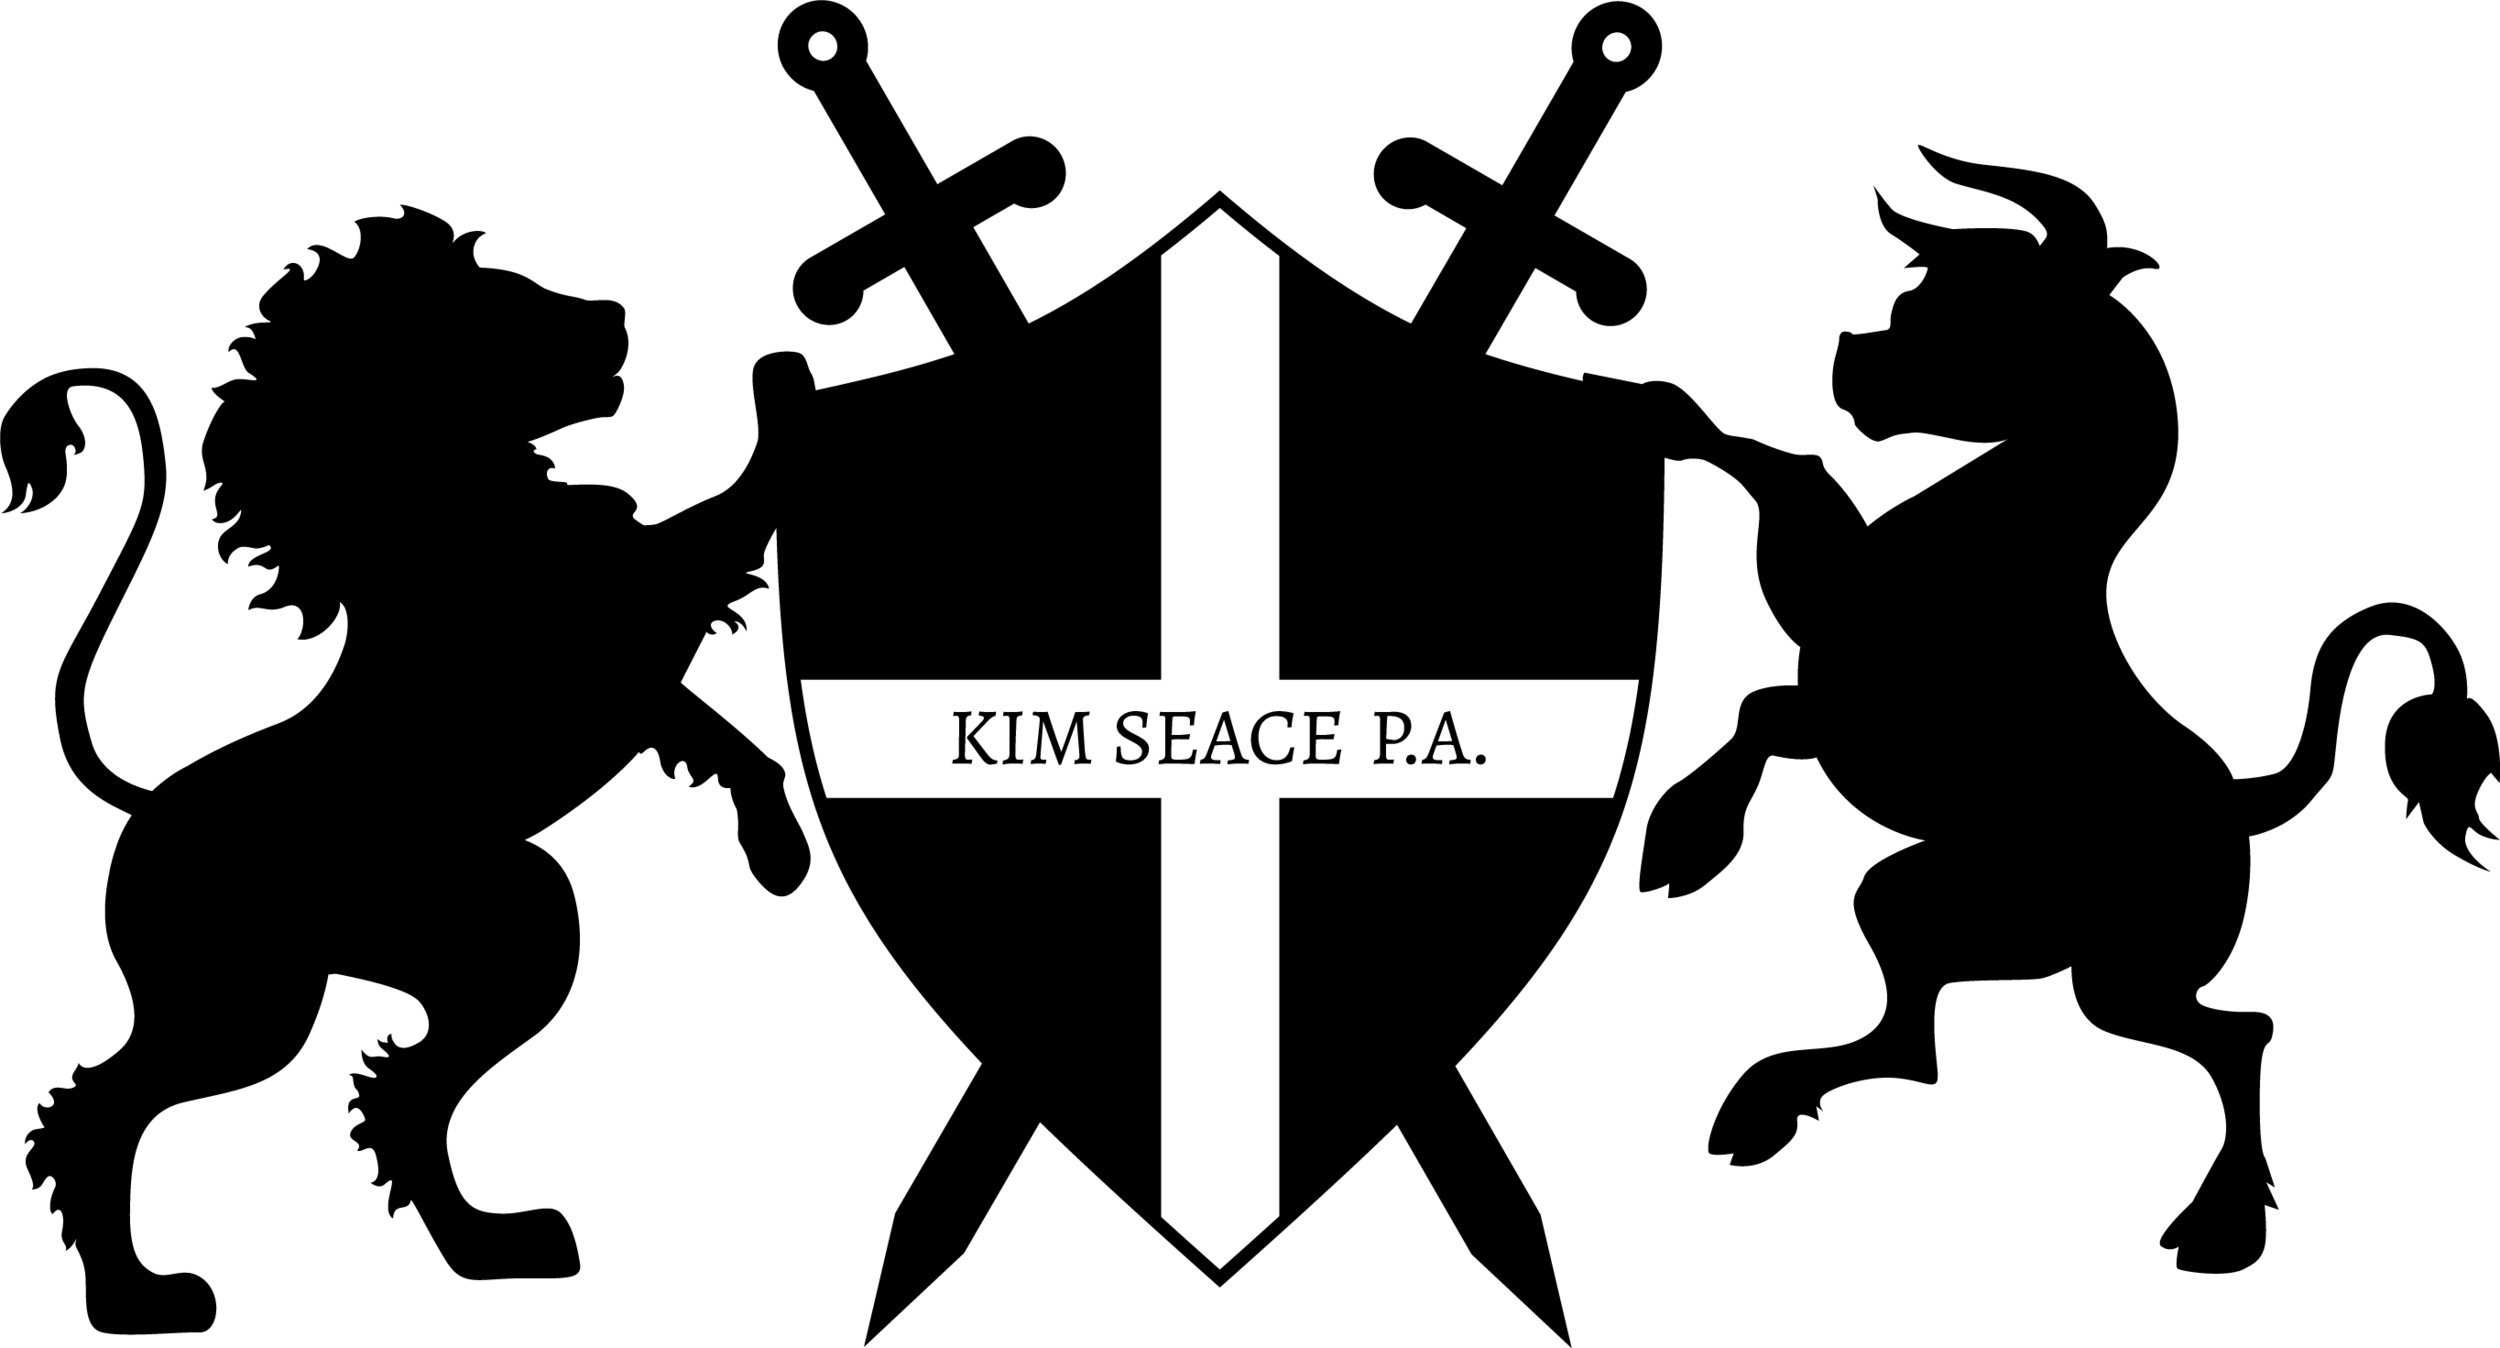 Kim Seace P.A.